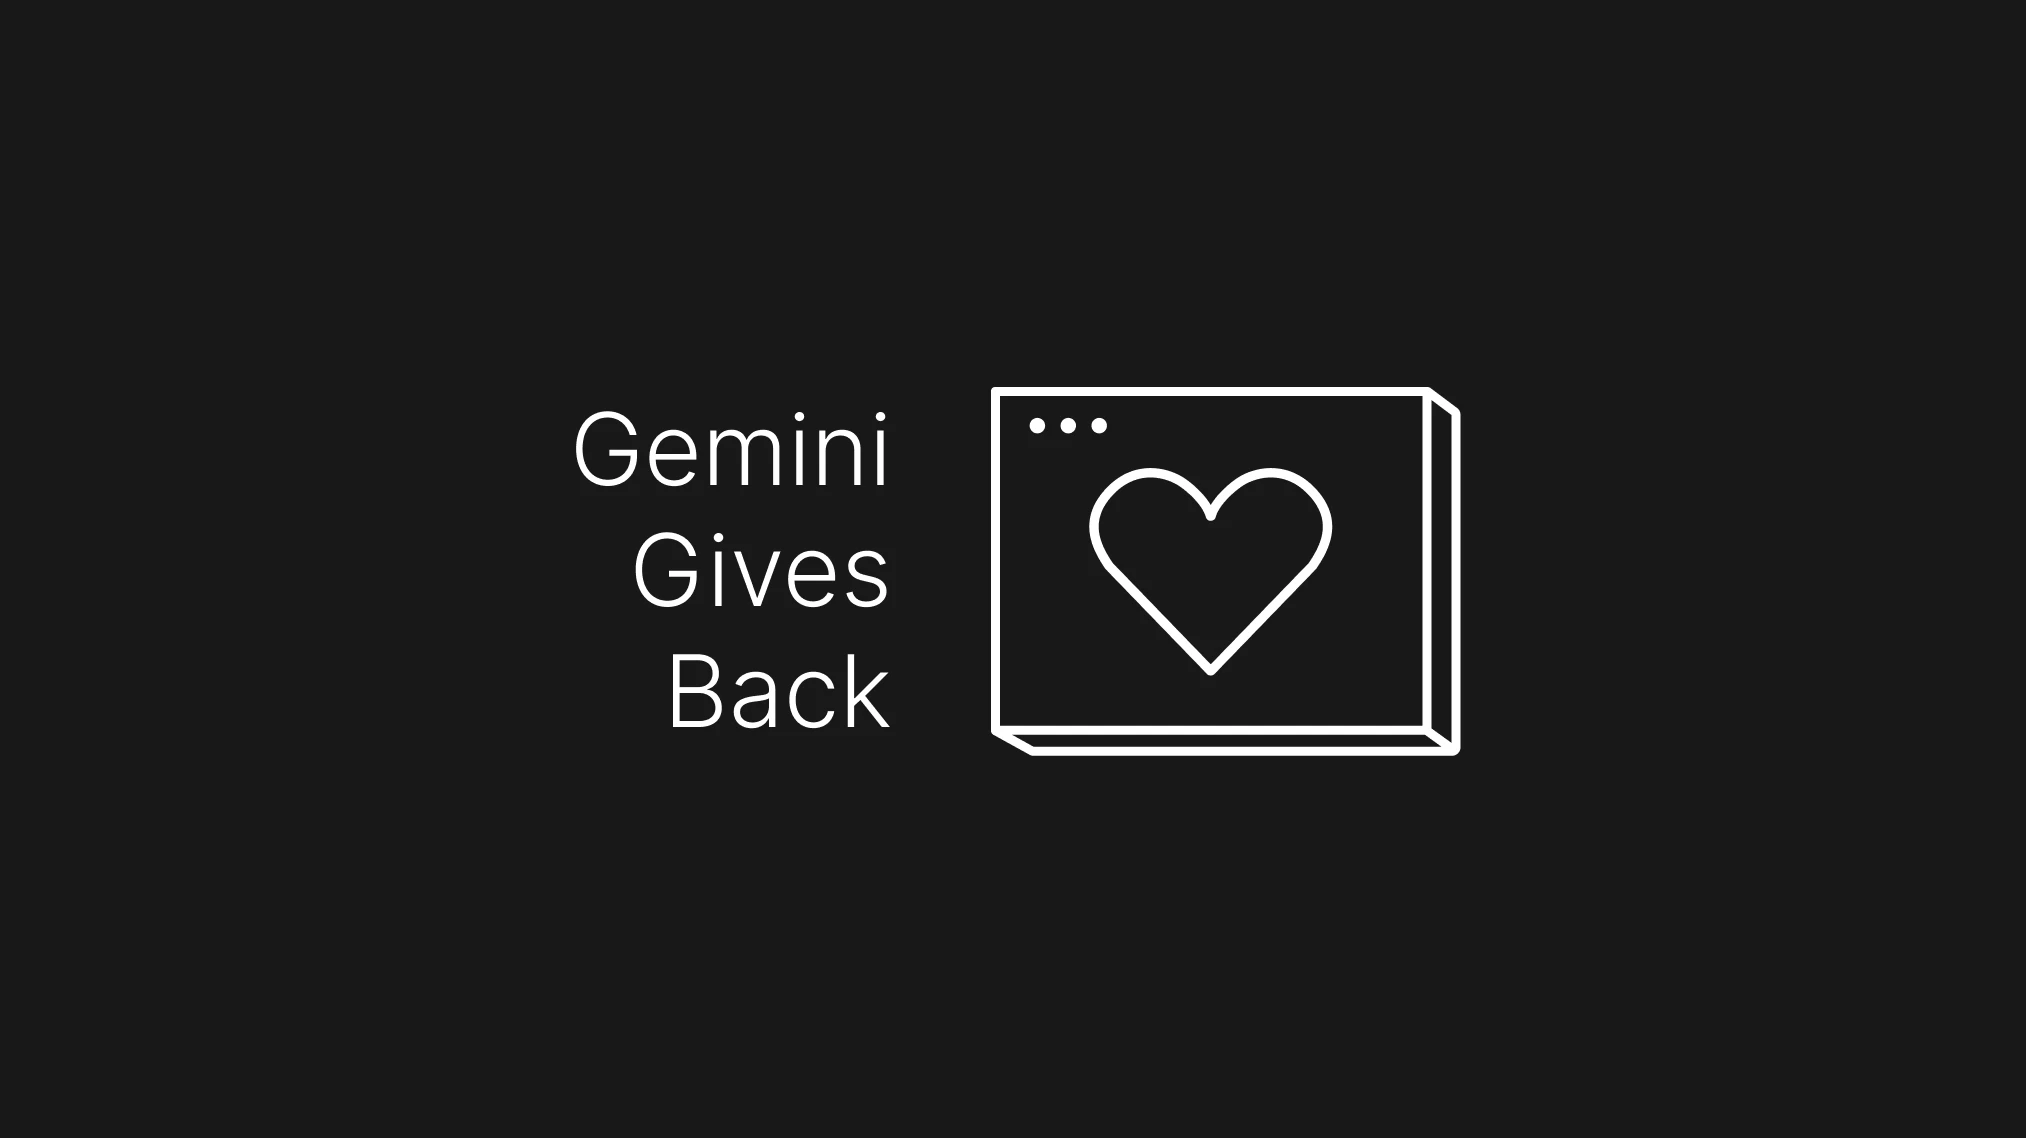 Gemini gives back